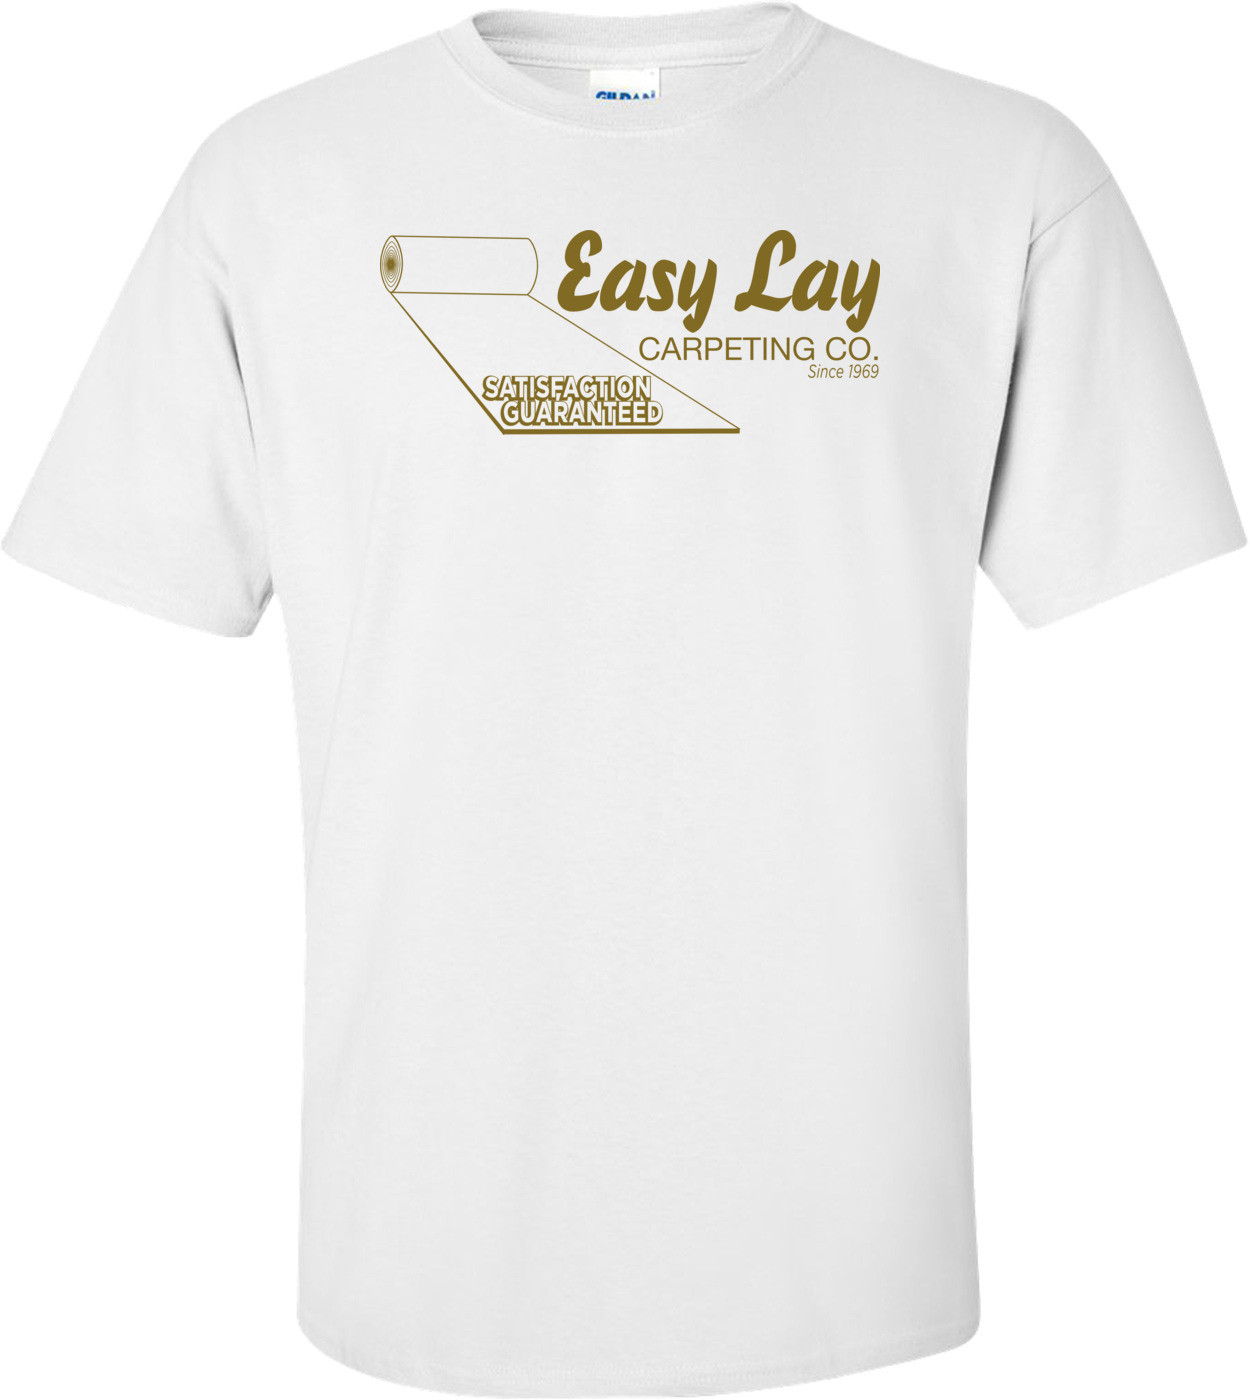 Easy Lay Carpeting Company T-shirt